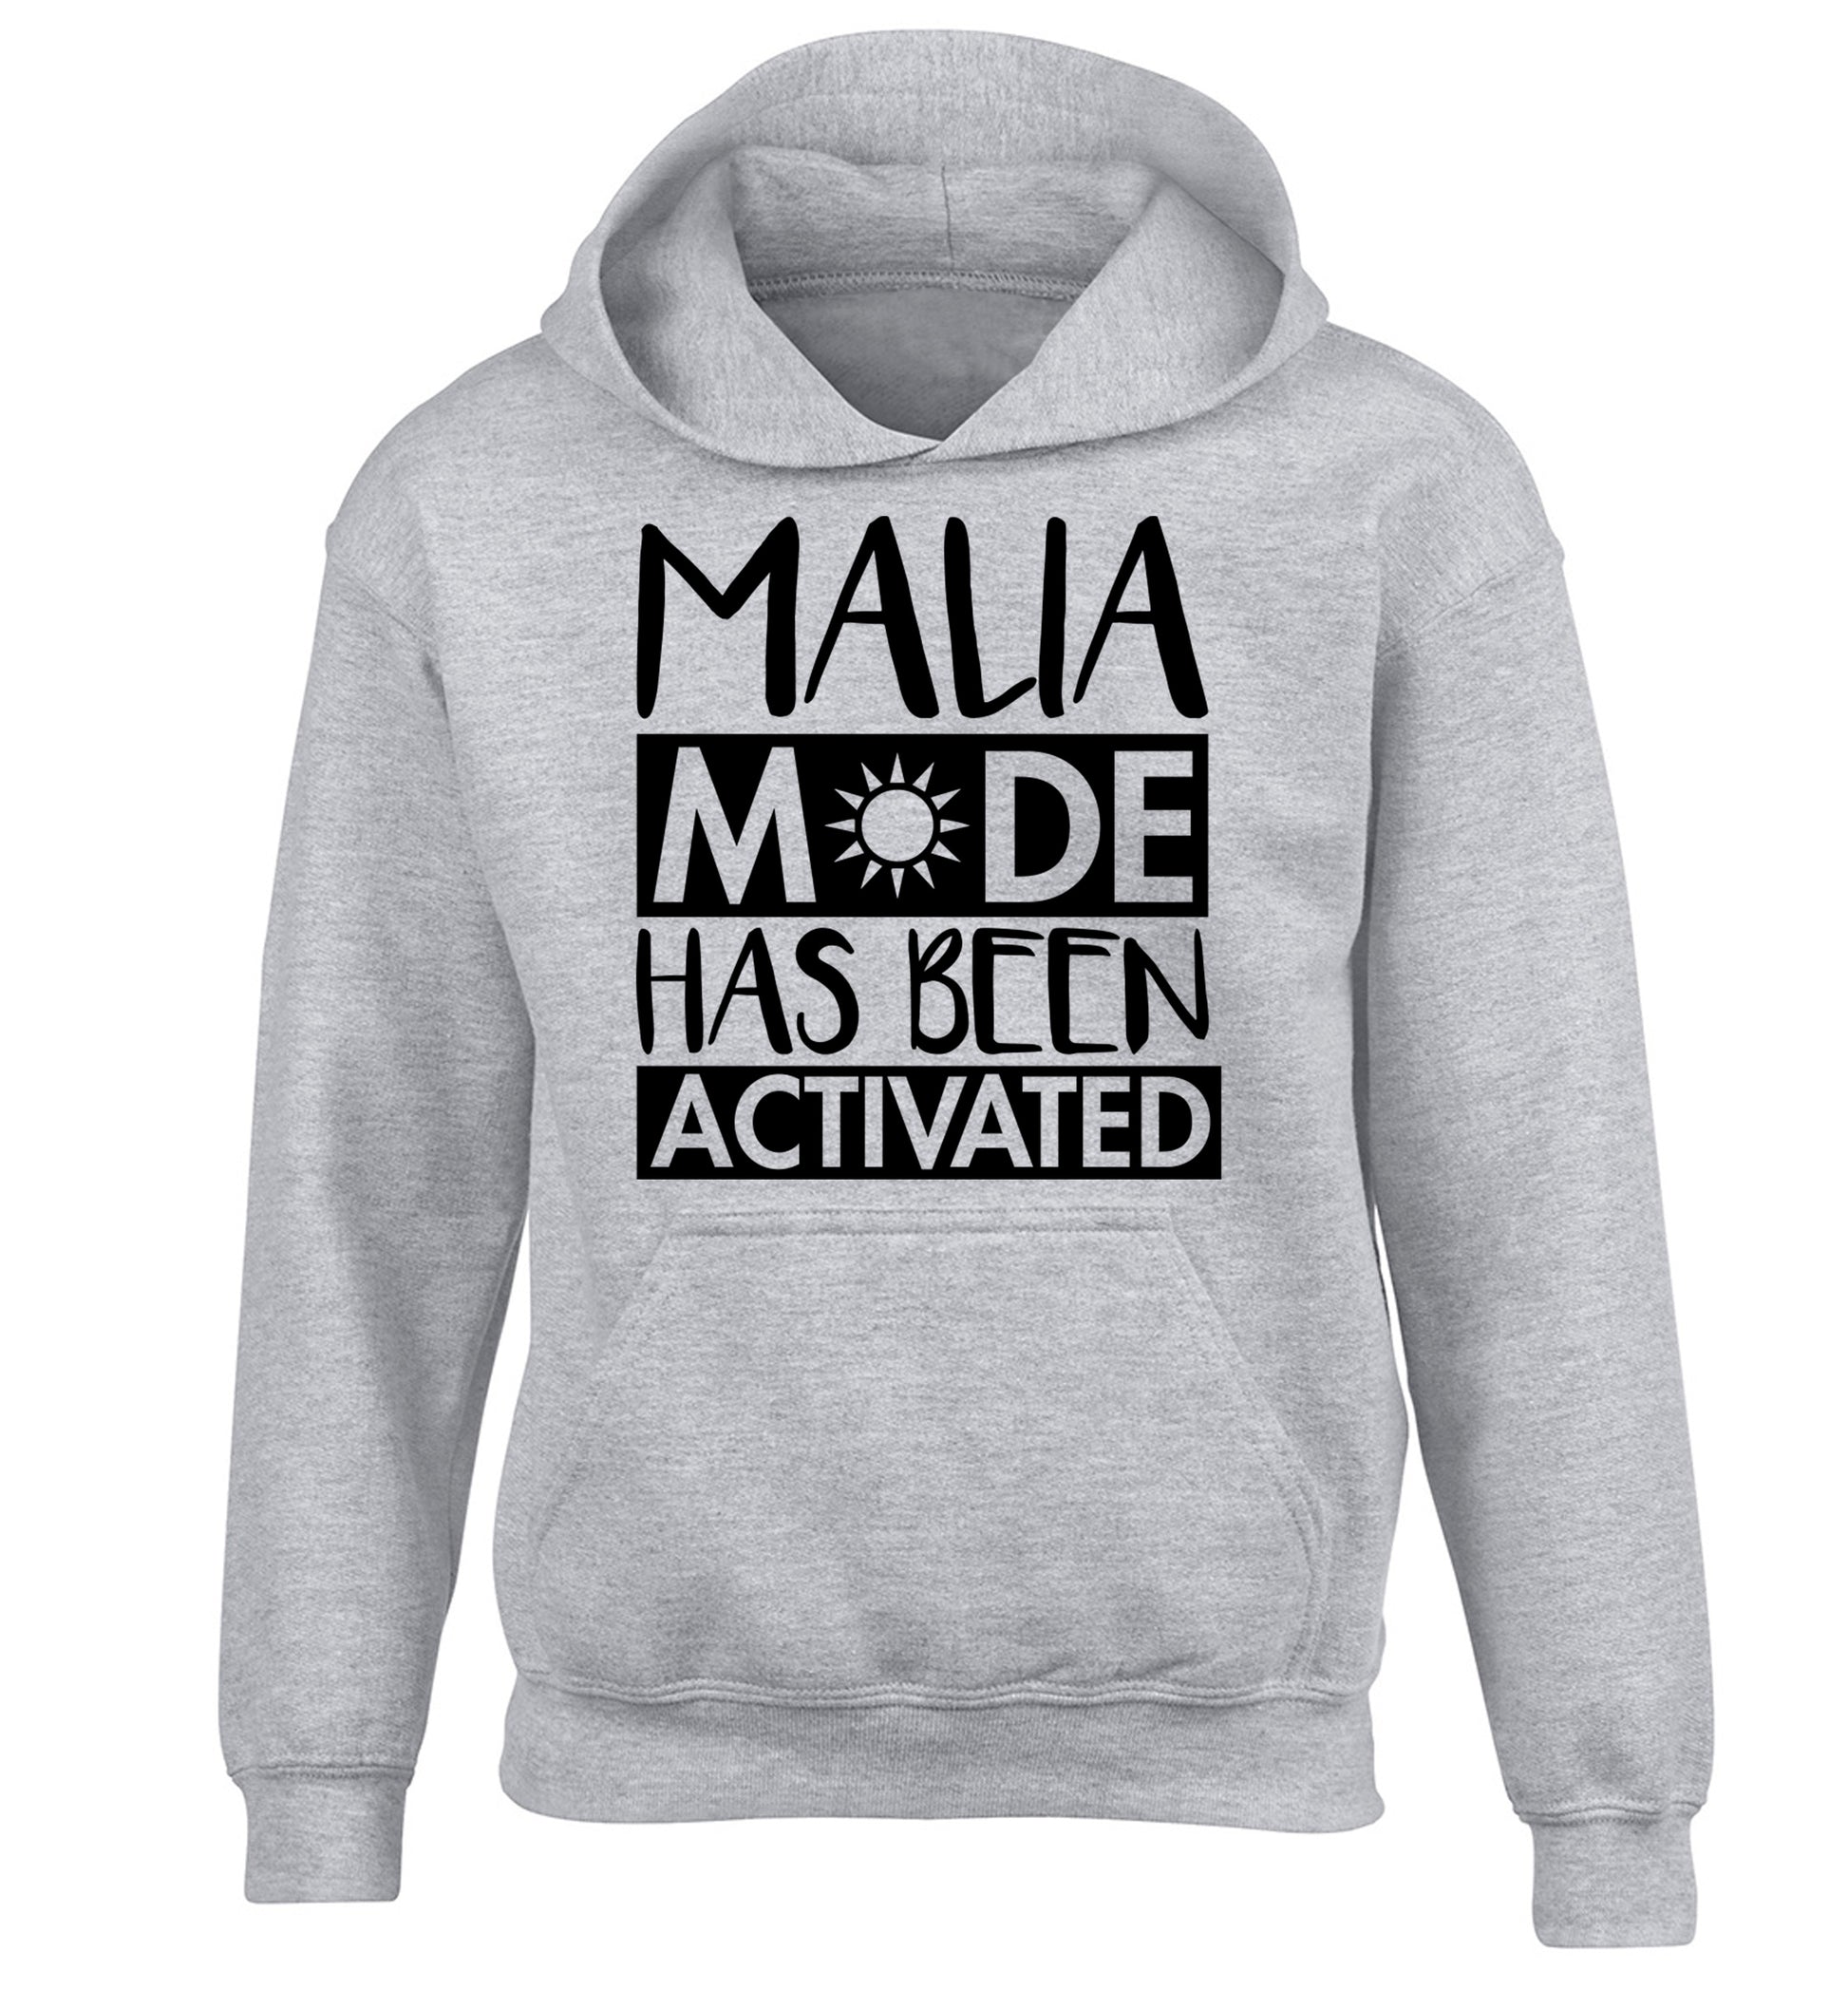 Malia mode has been activated children's grey hoodie 12-13 Years